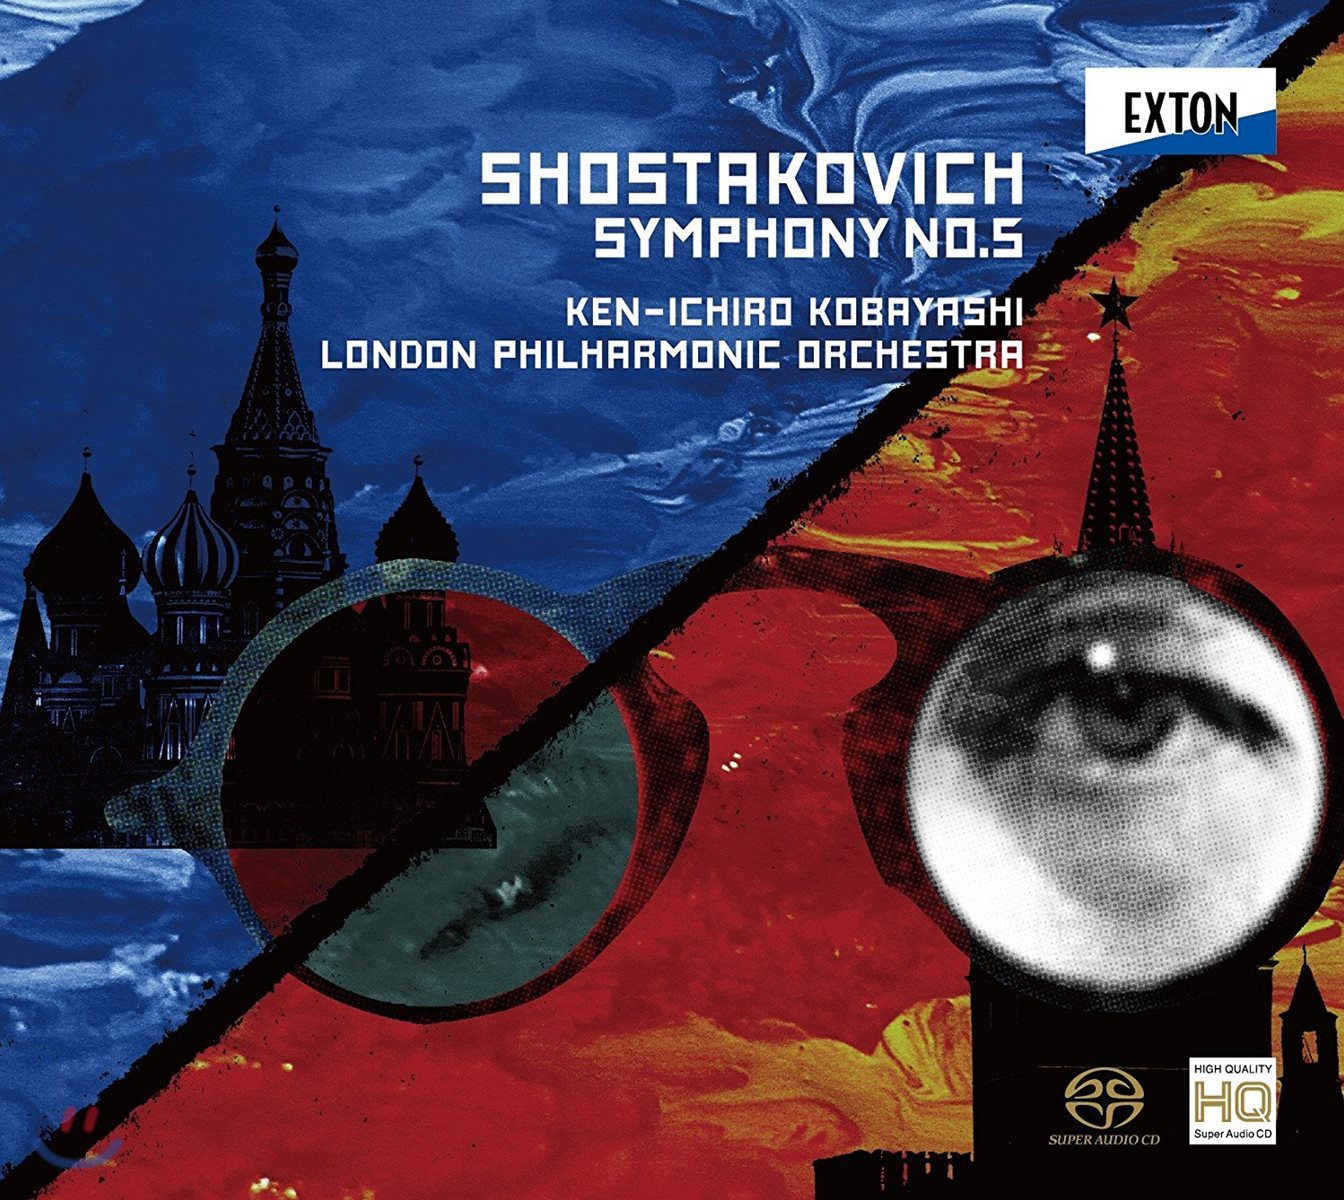 Ken-Ichiro Kobayashi 쇼스타코비치: 교향곡 5번 (Shostakovich: Symphony No.5 Op.47)